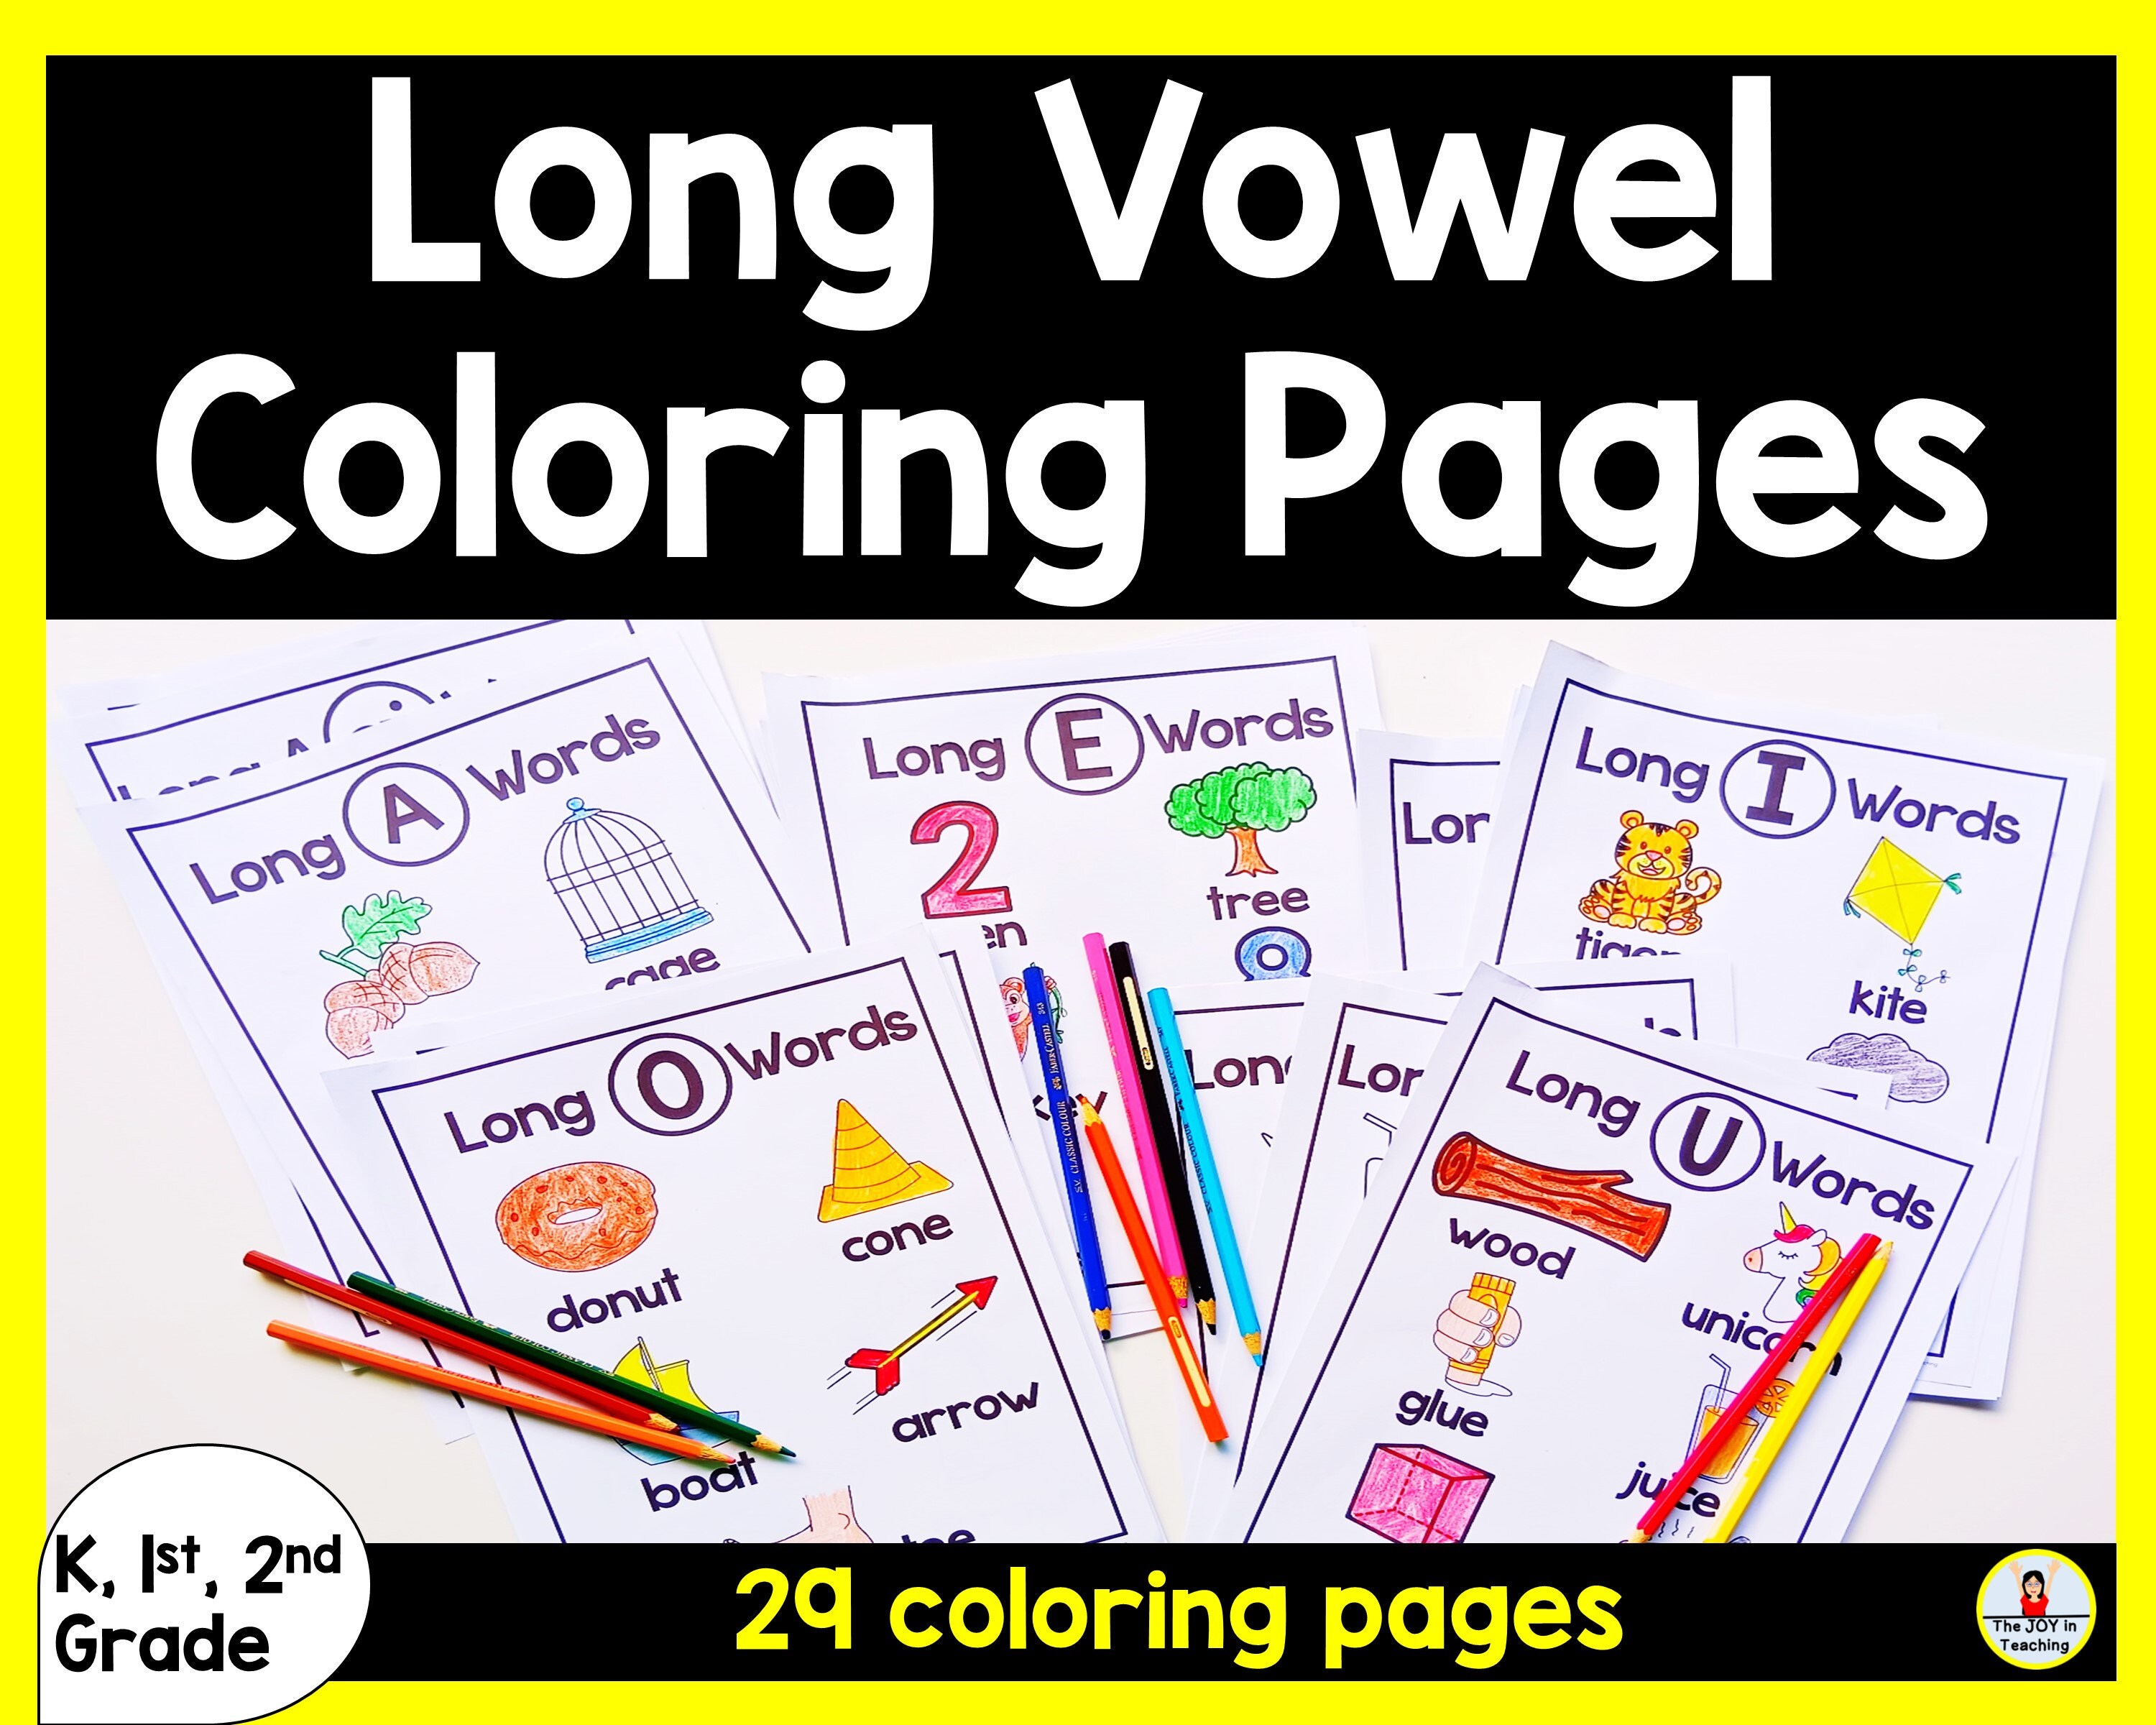 Long vowel coloring pages